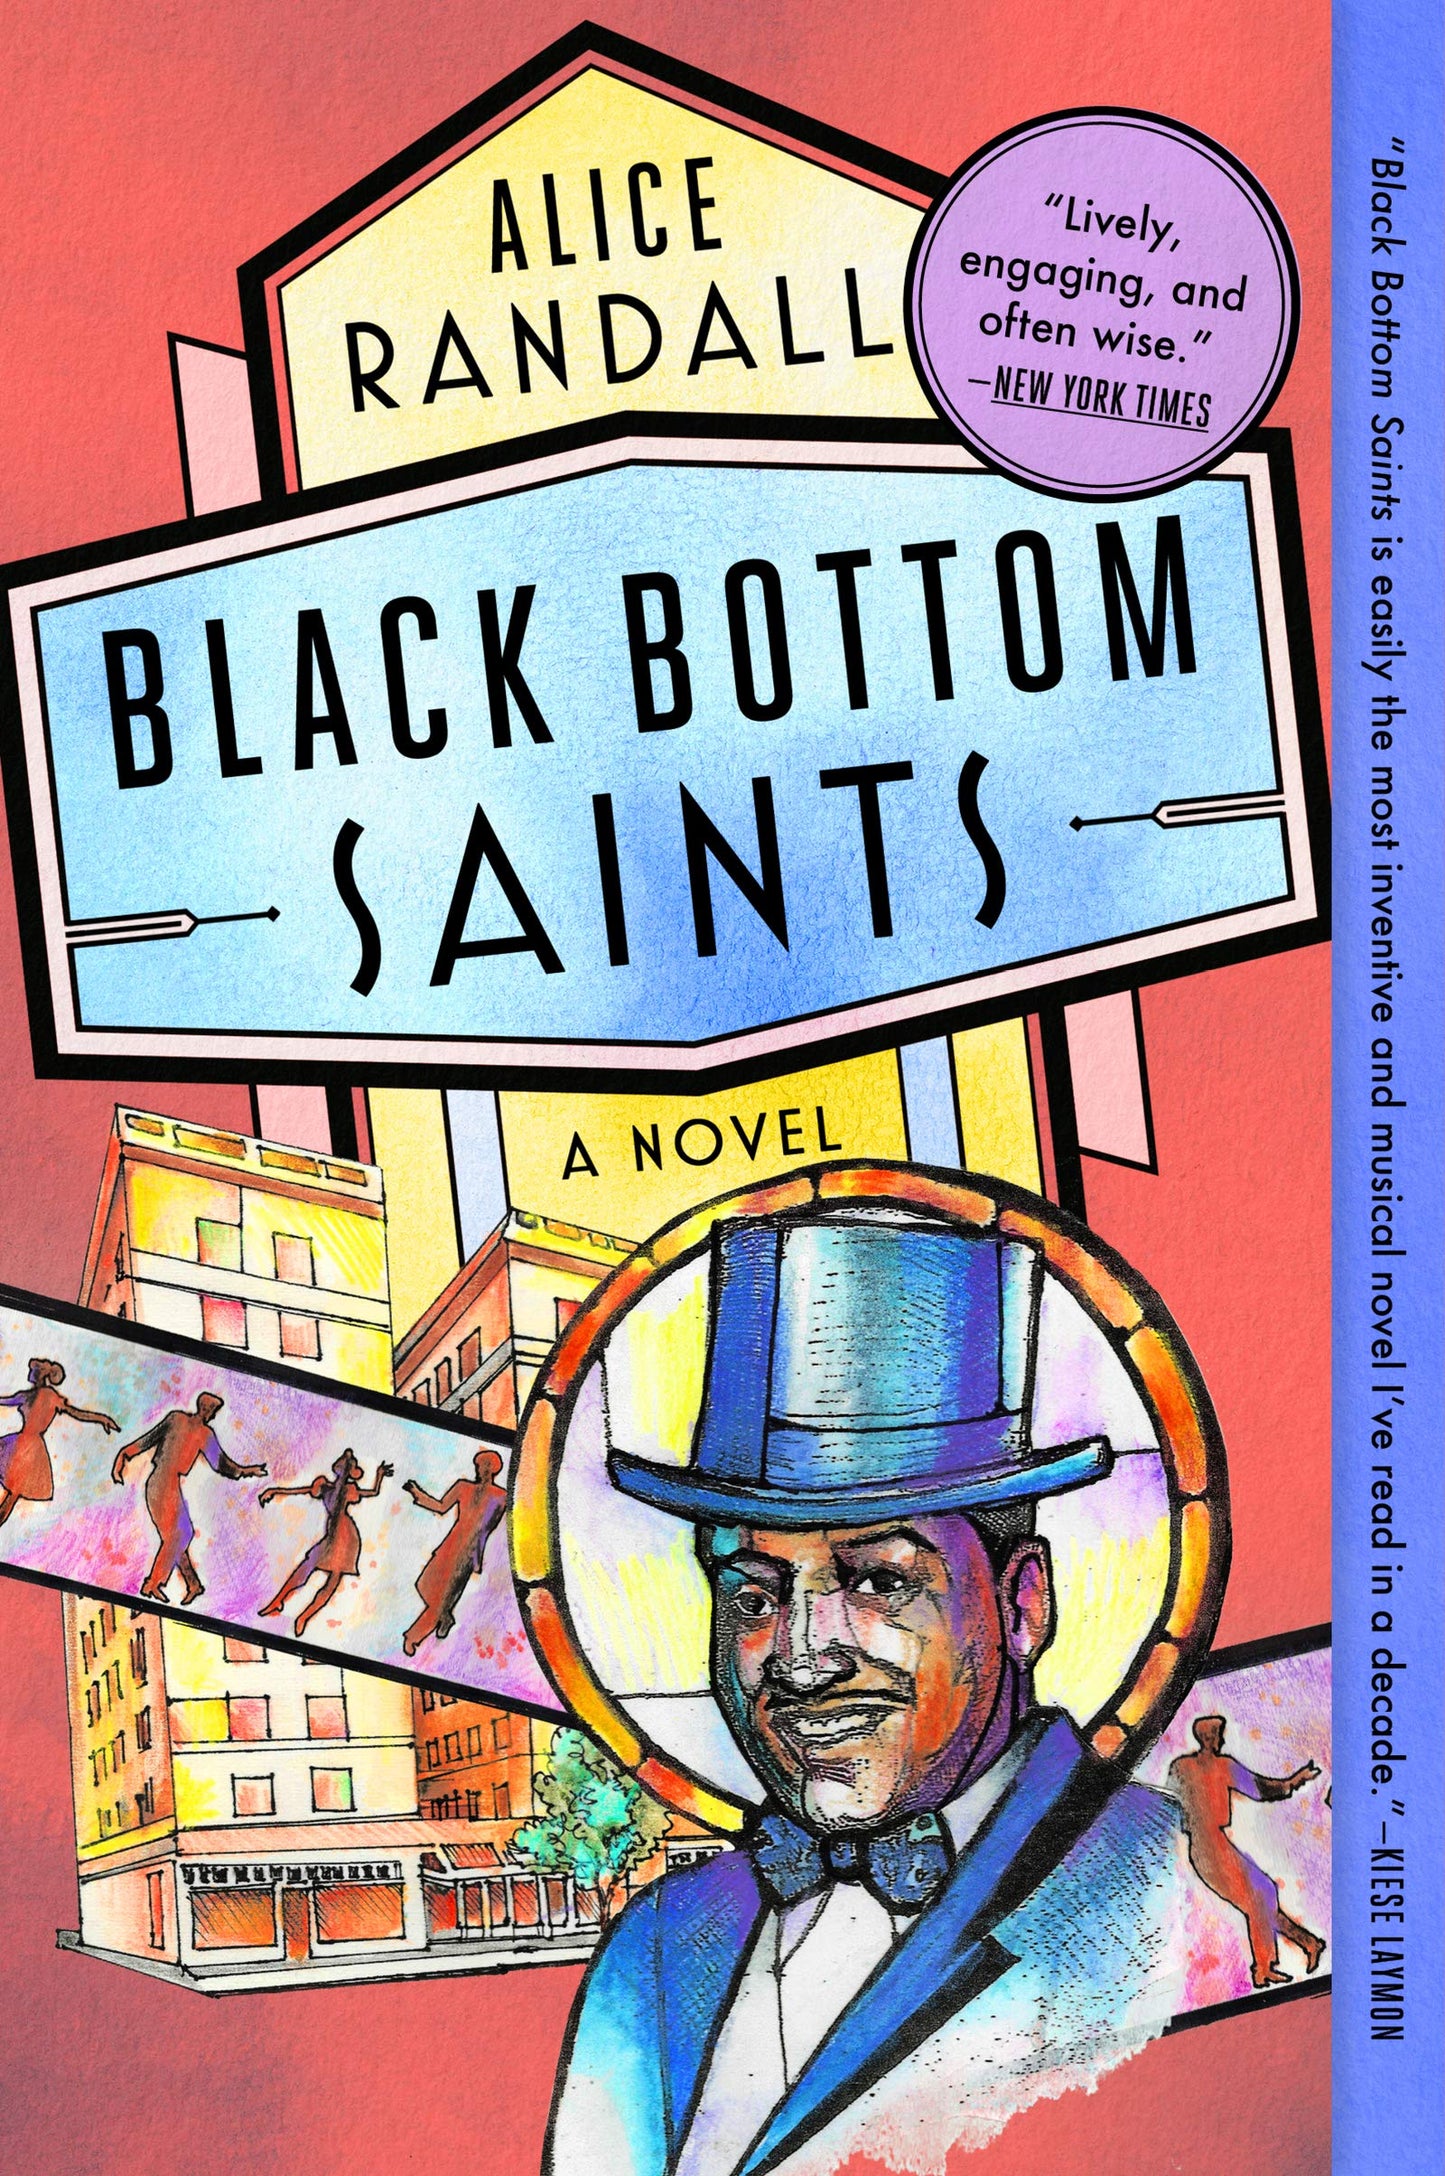 Black Bottom Saints // A Novel